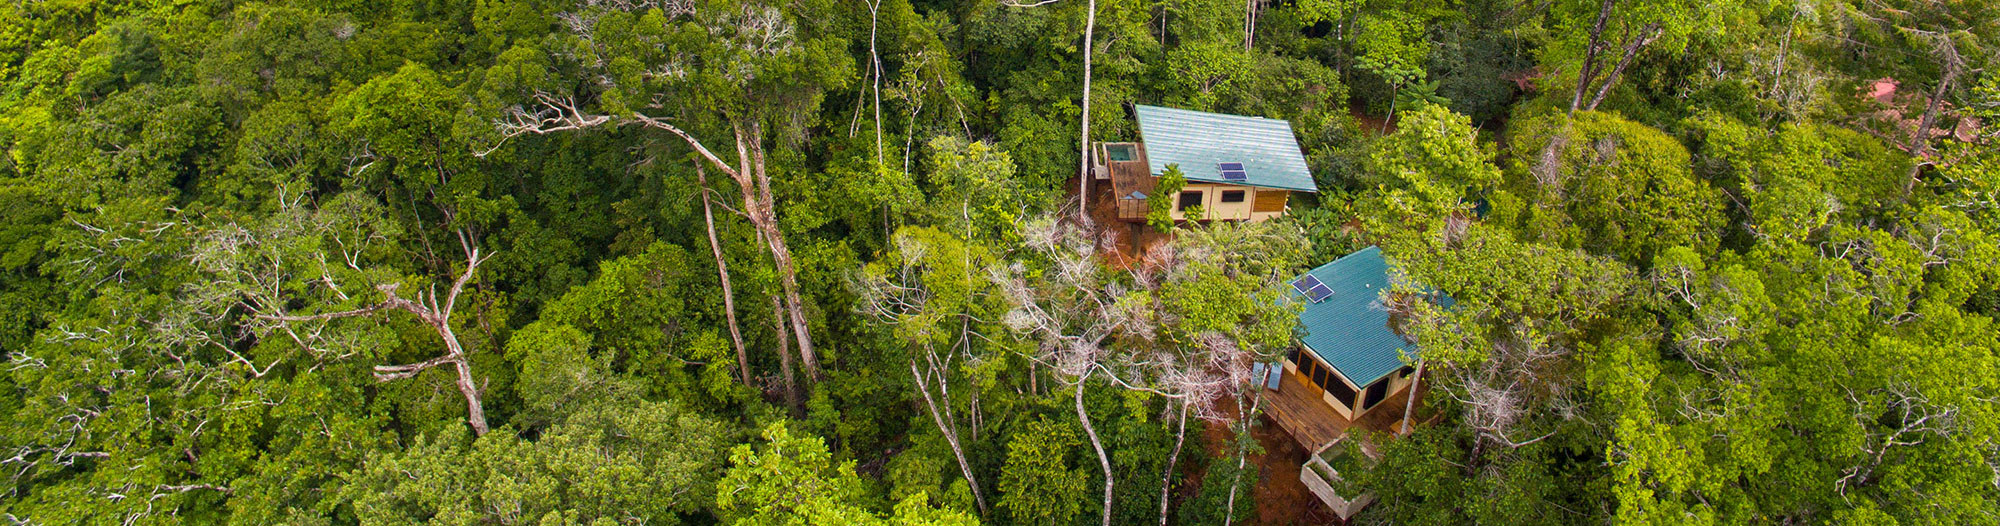 Costa Rica, El Remanso Lodge, Luftbild Regenwald, Latin America Tours, Reisen